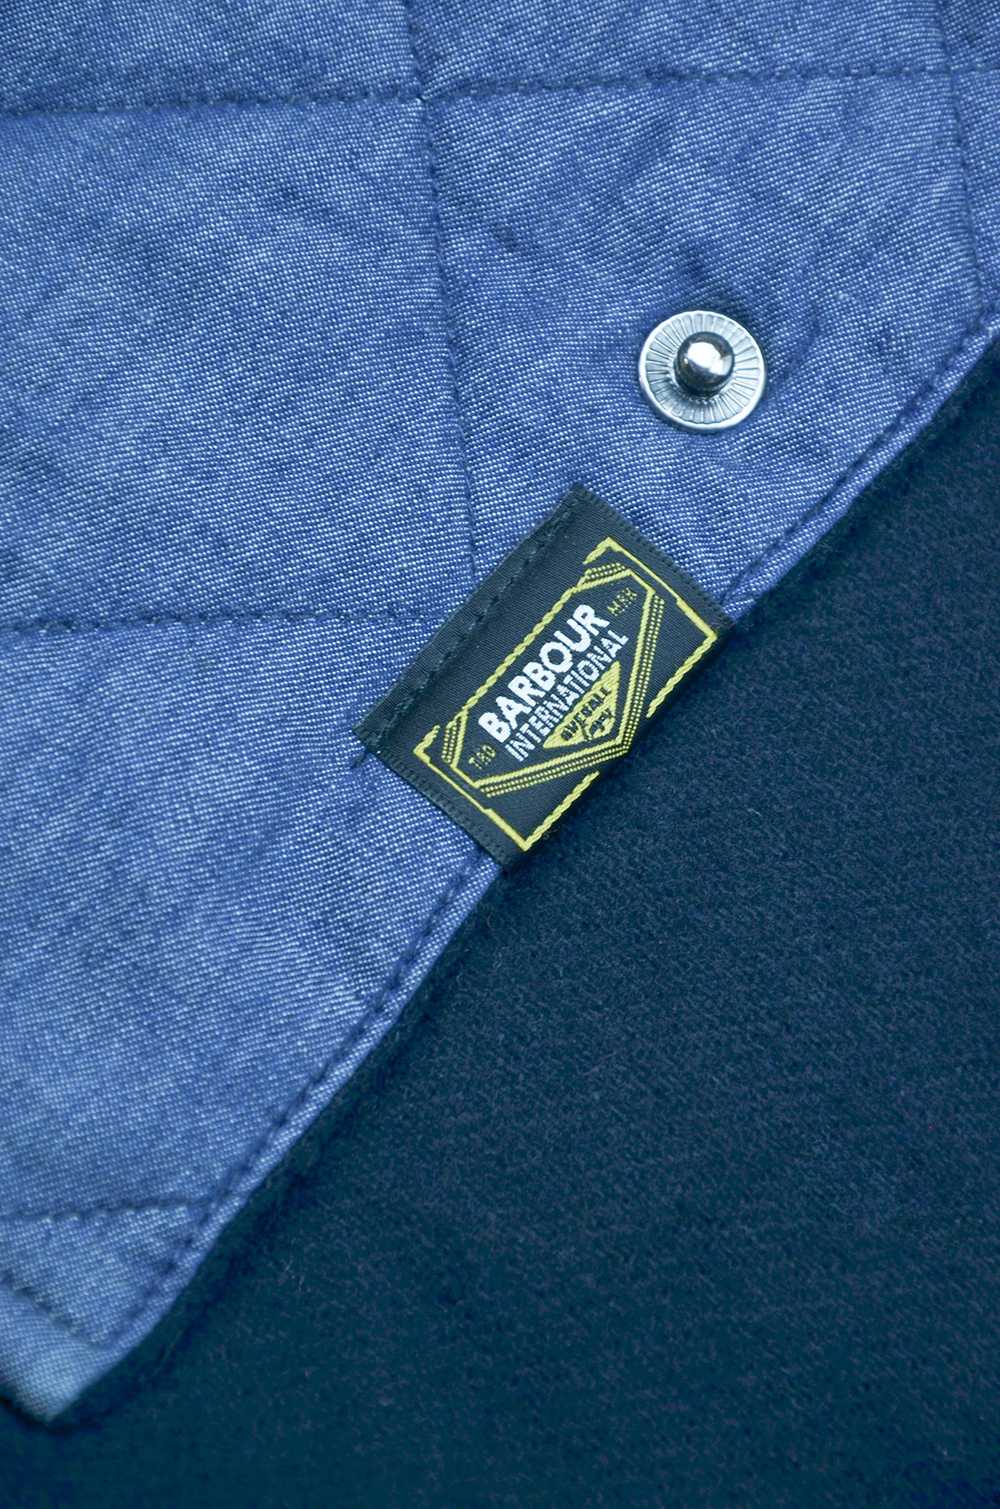 Barbour BARBOUR International Blue Quilted Jacket - image 10